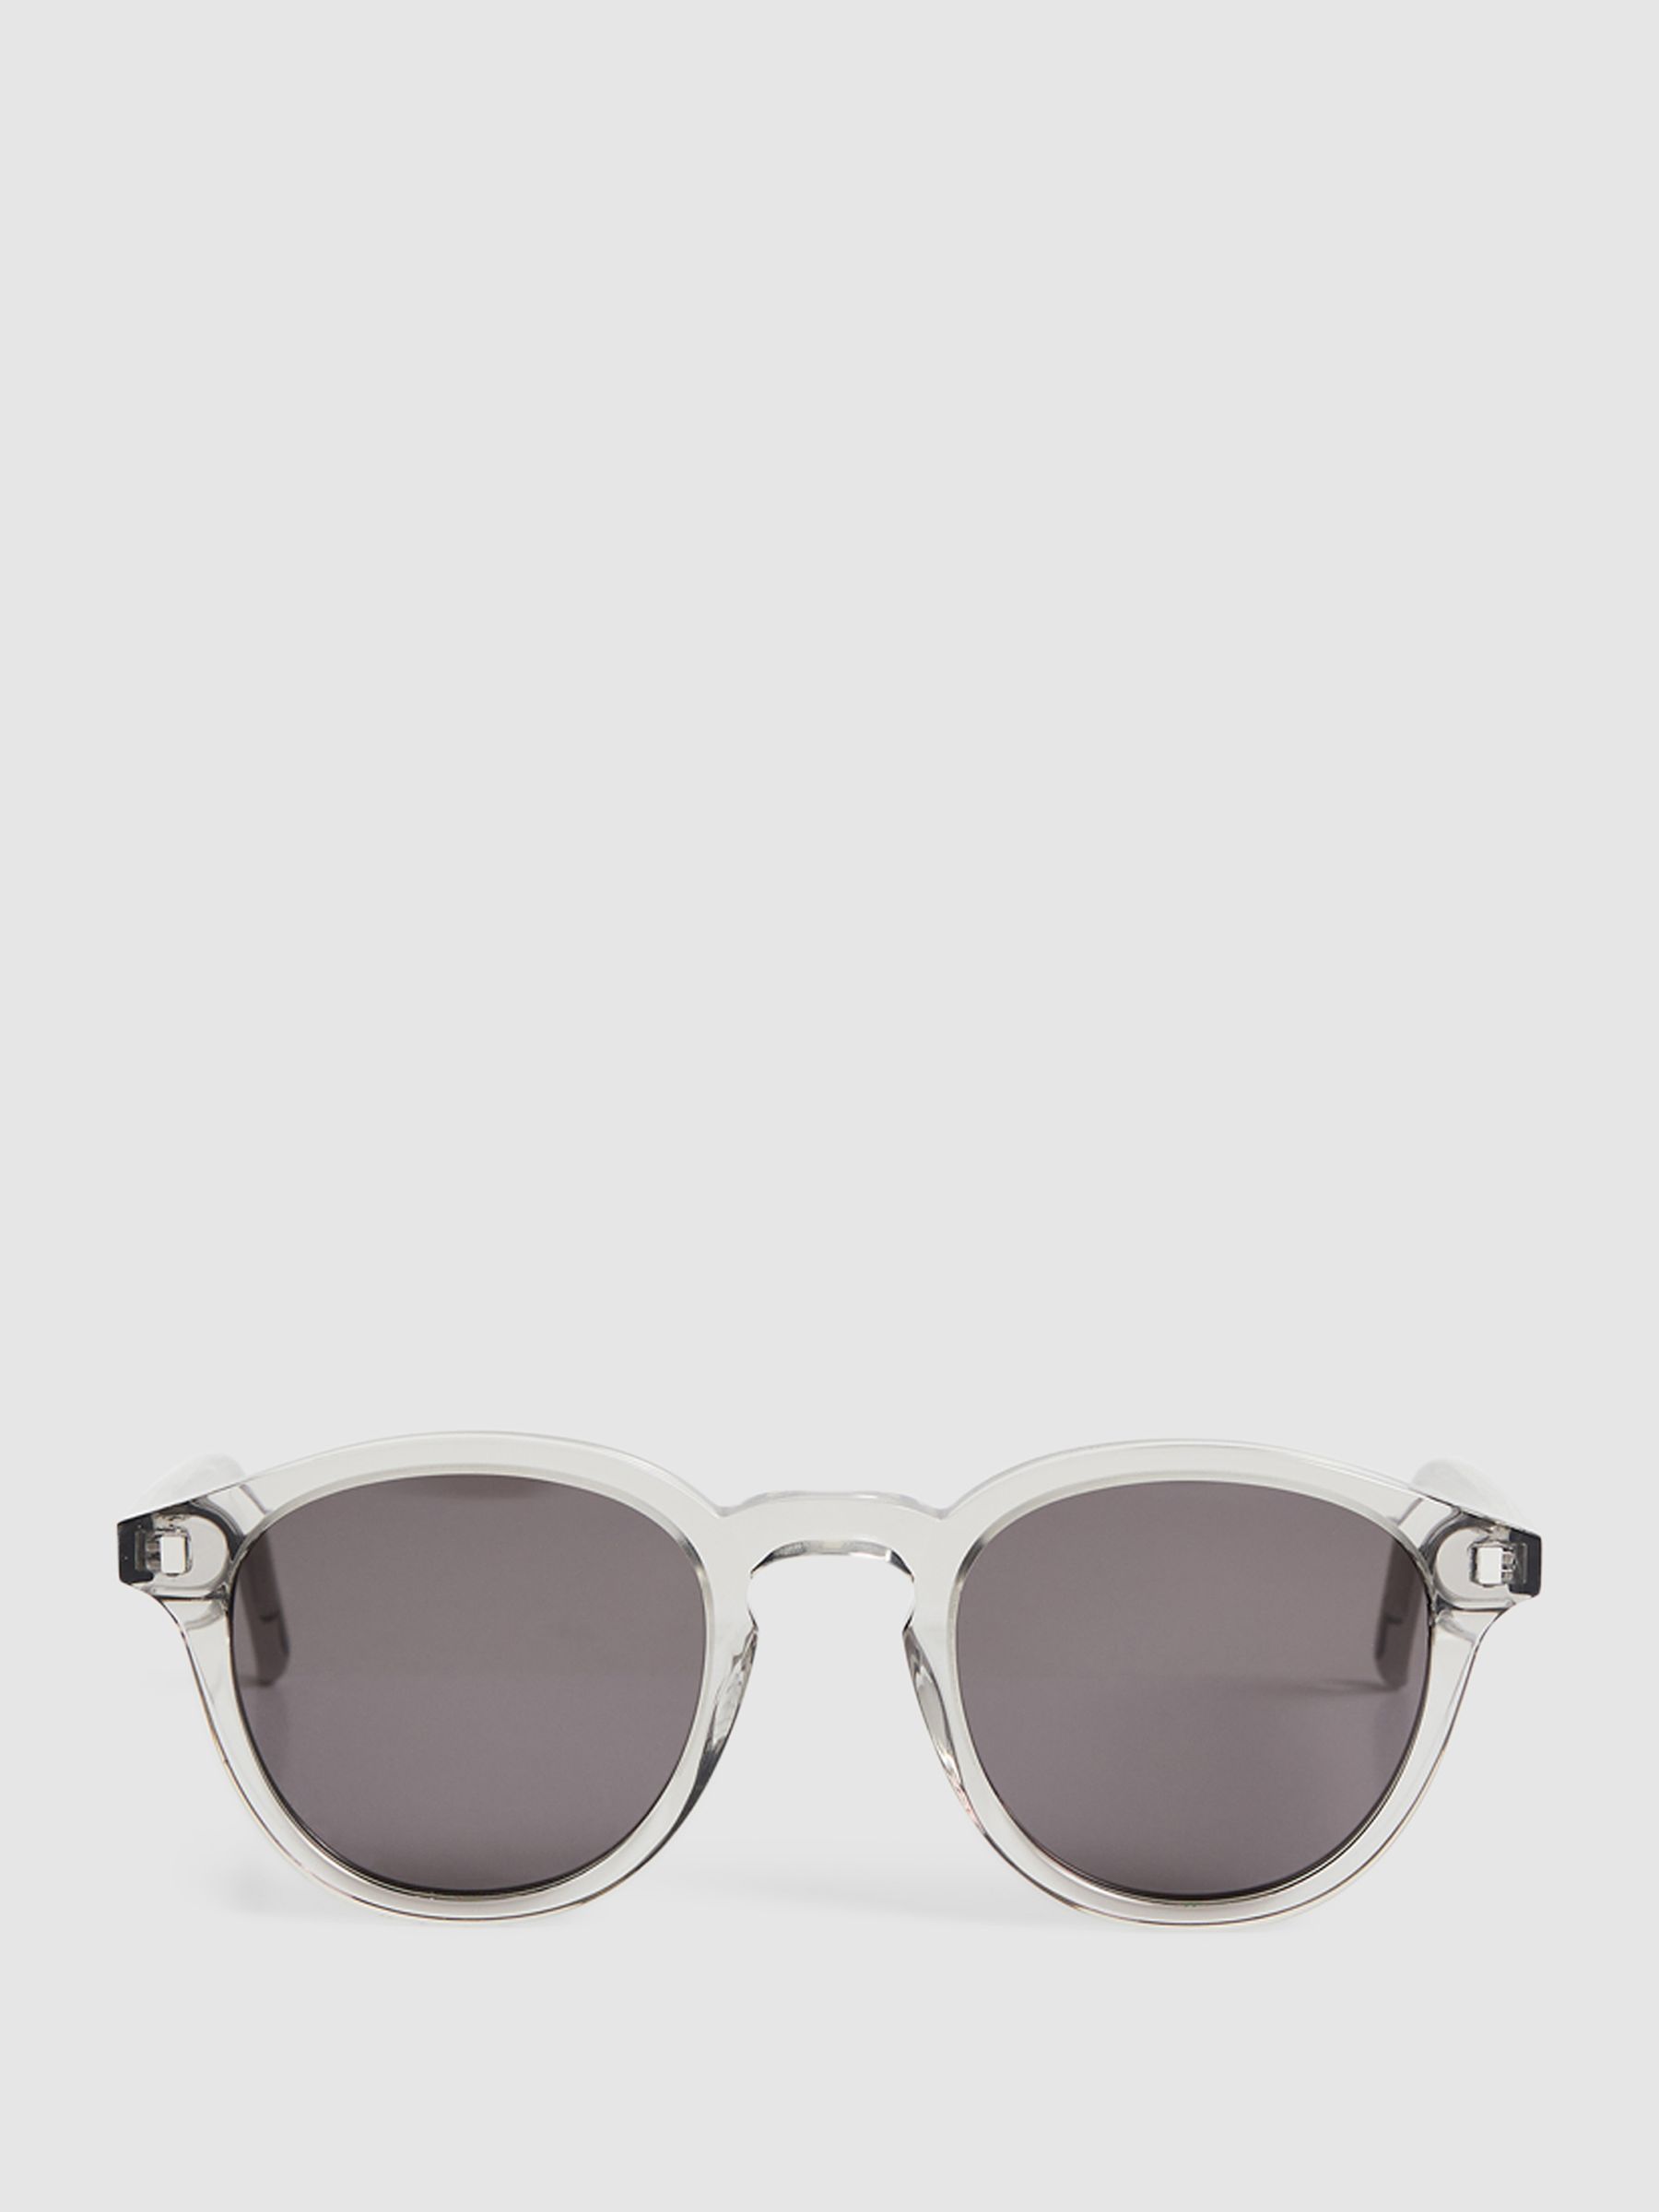 Monokel Eyewear Round Sunglasses in Grey - REISS